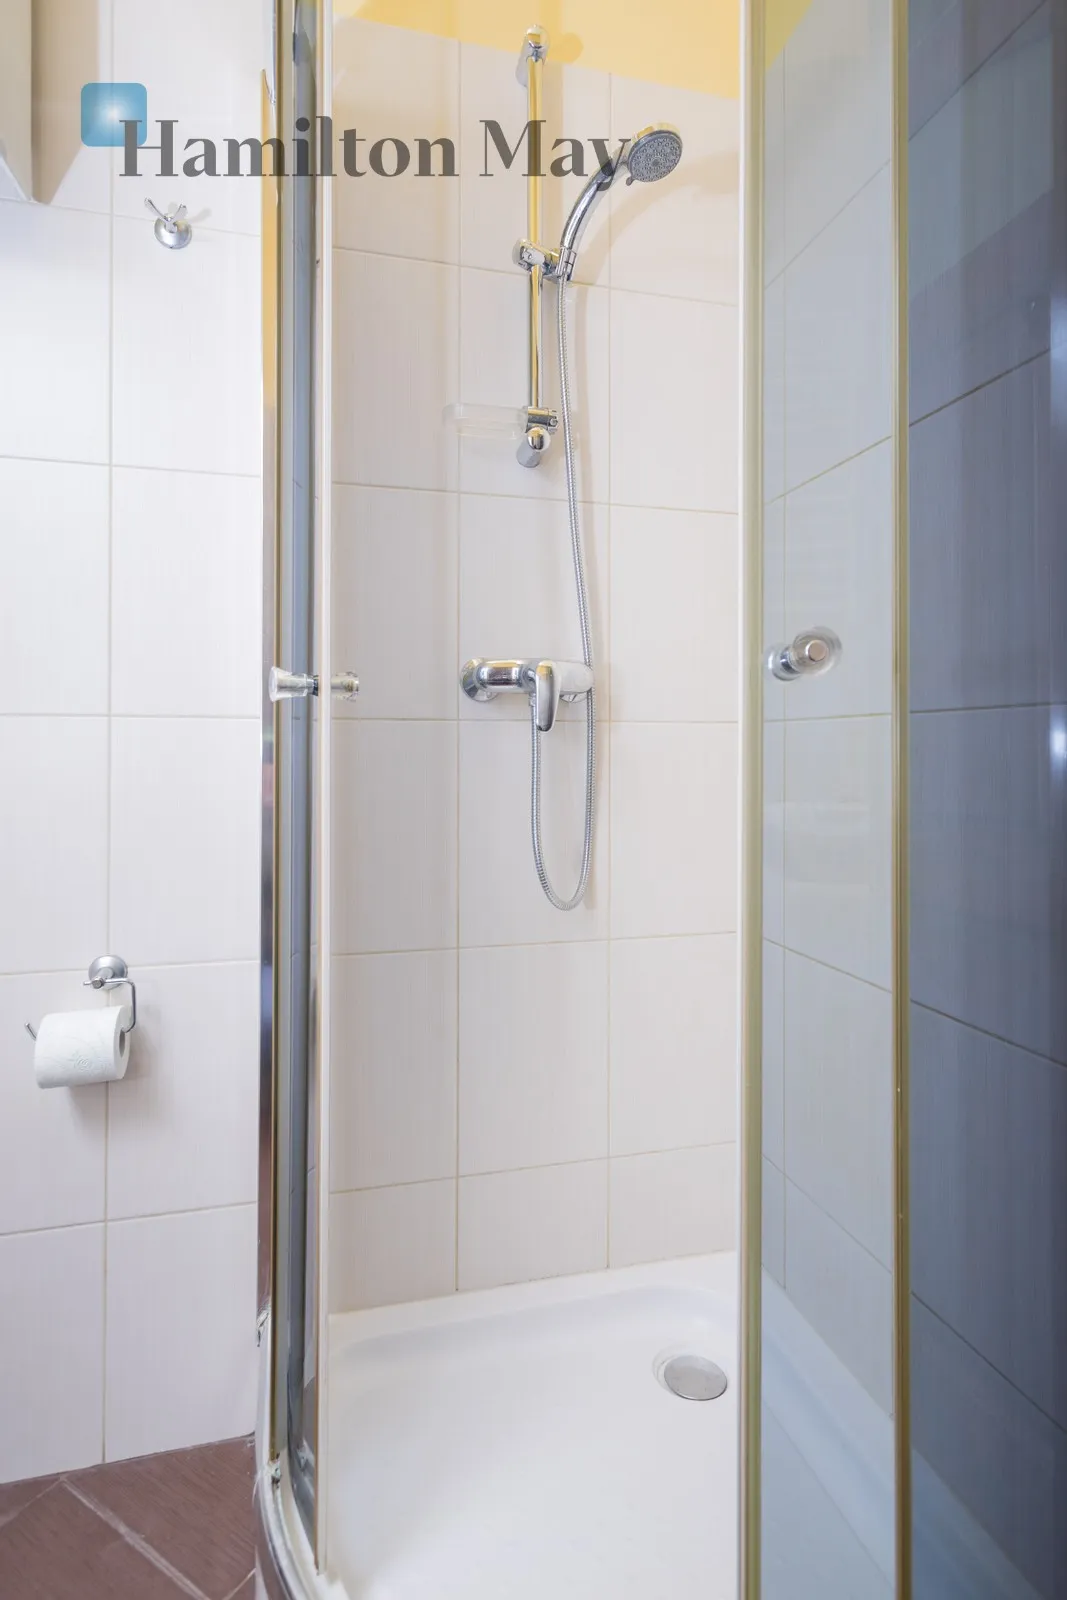 Level: 2 Price: 2650 PLN Bedrooms: 1 Bathrooms: 1 Size: 55m2